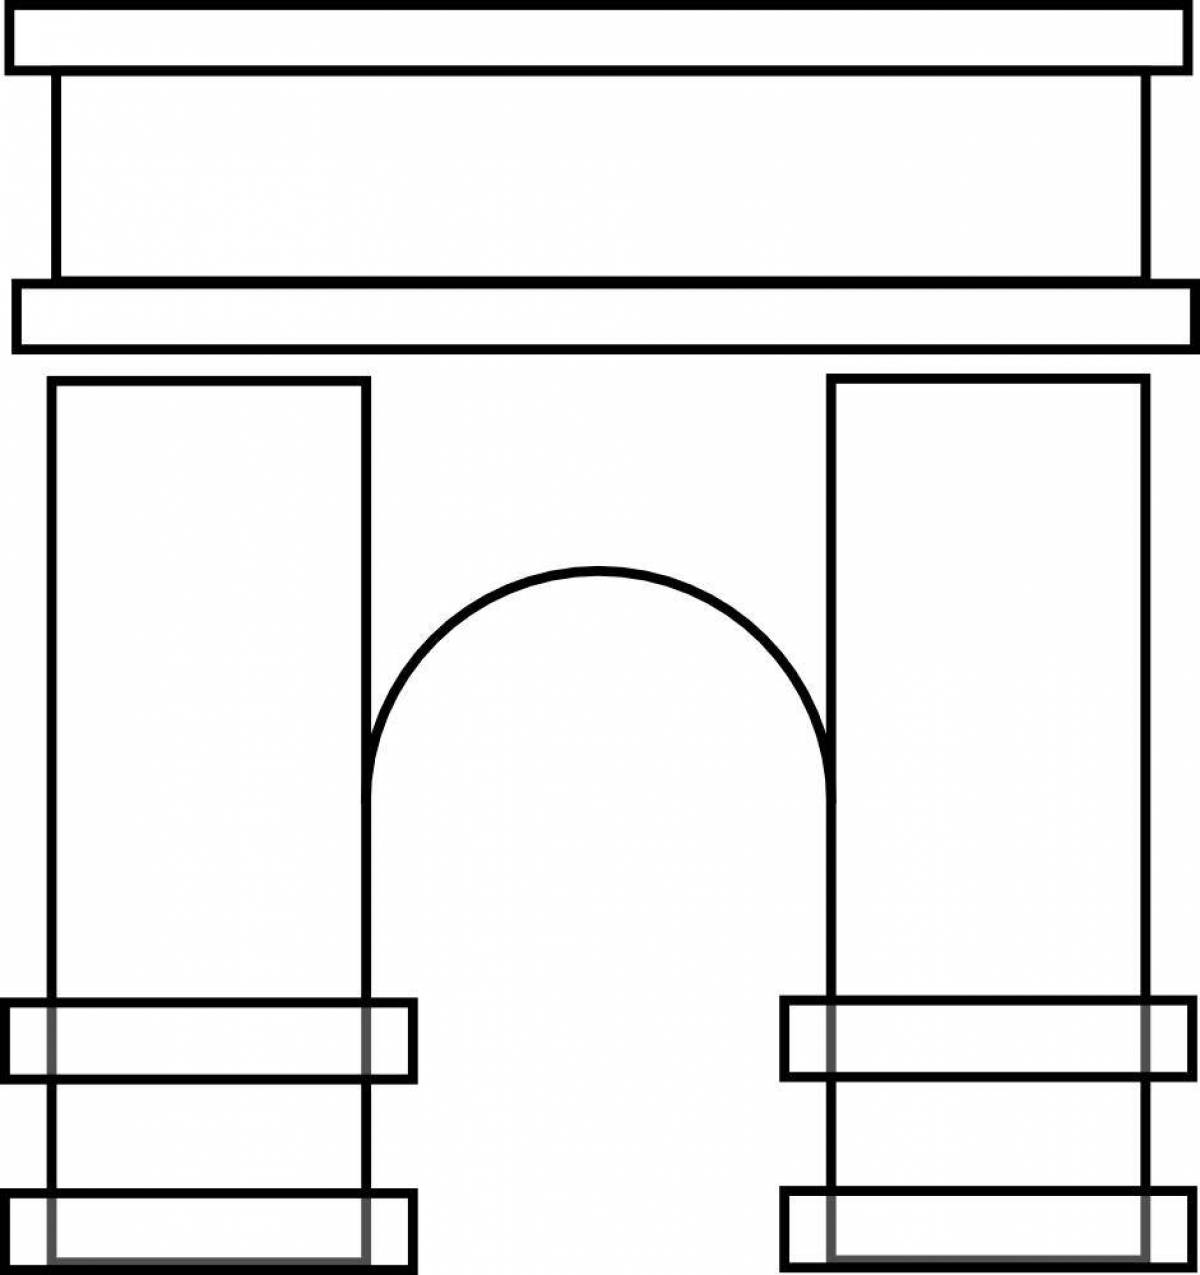 Triumphal arch #22